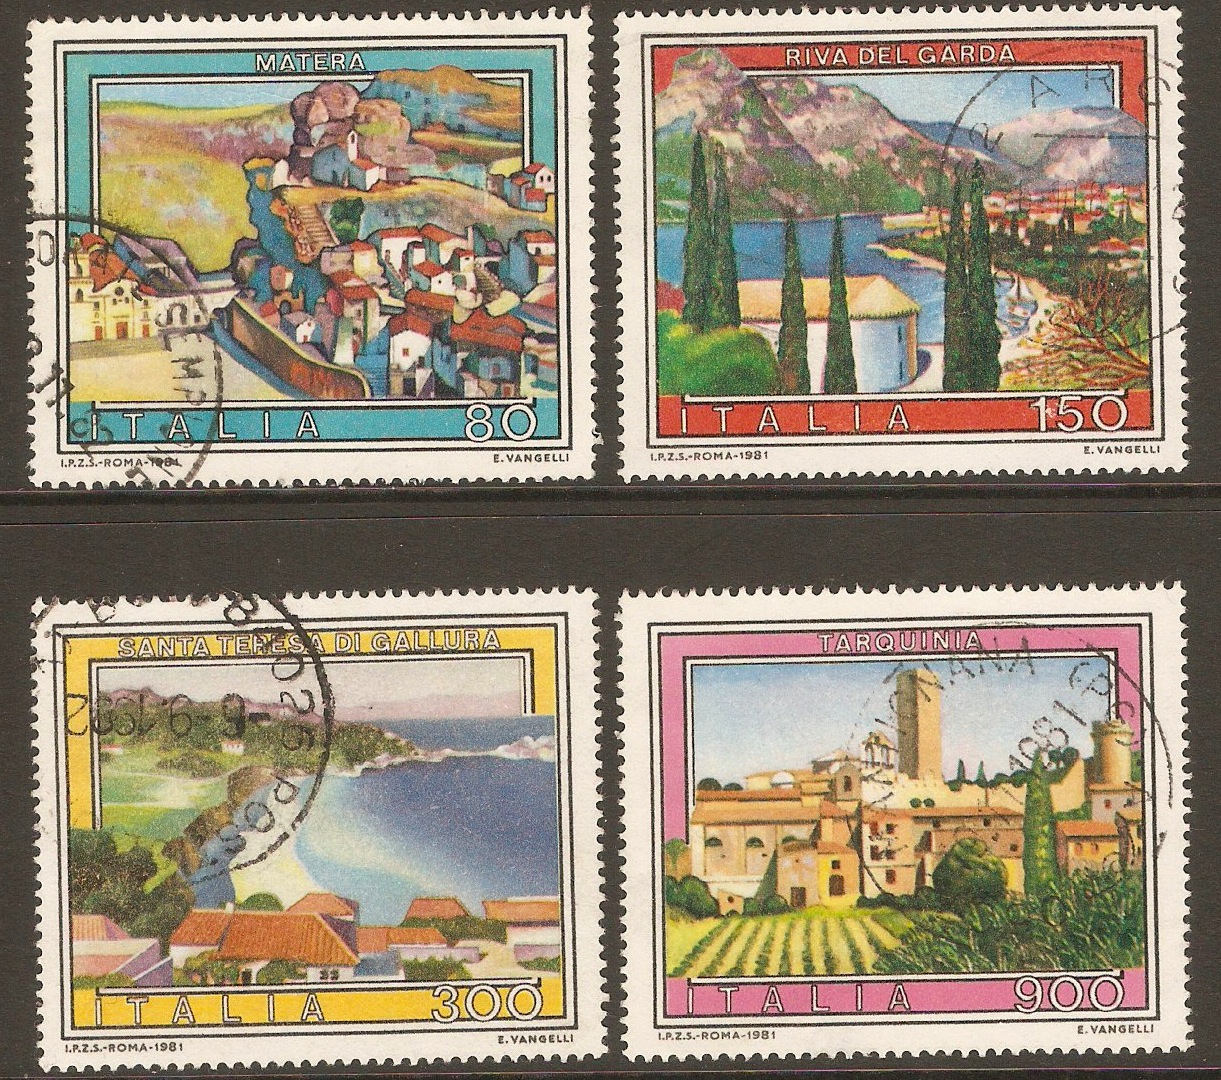 Italy 1981 Tourist Publicity set (8th. Series). SG1722-SG1725.